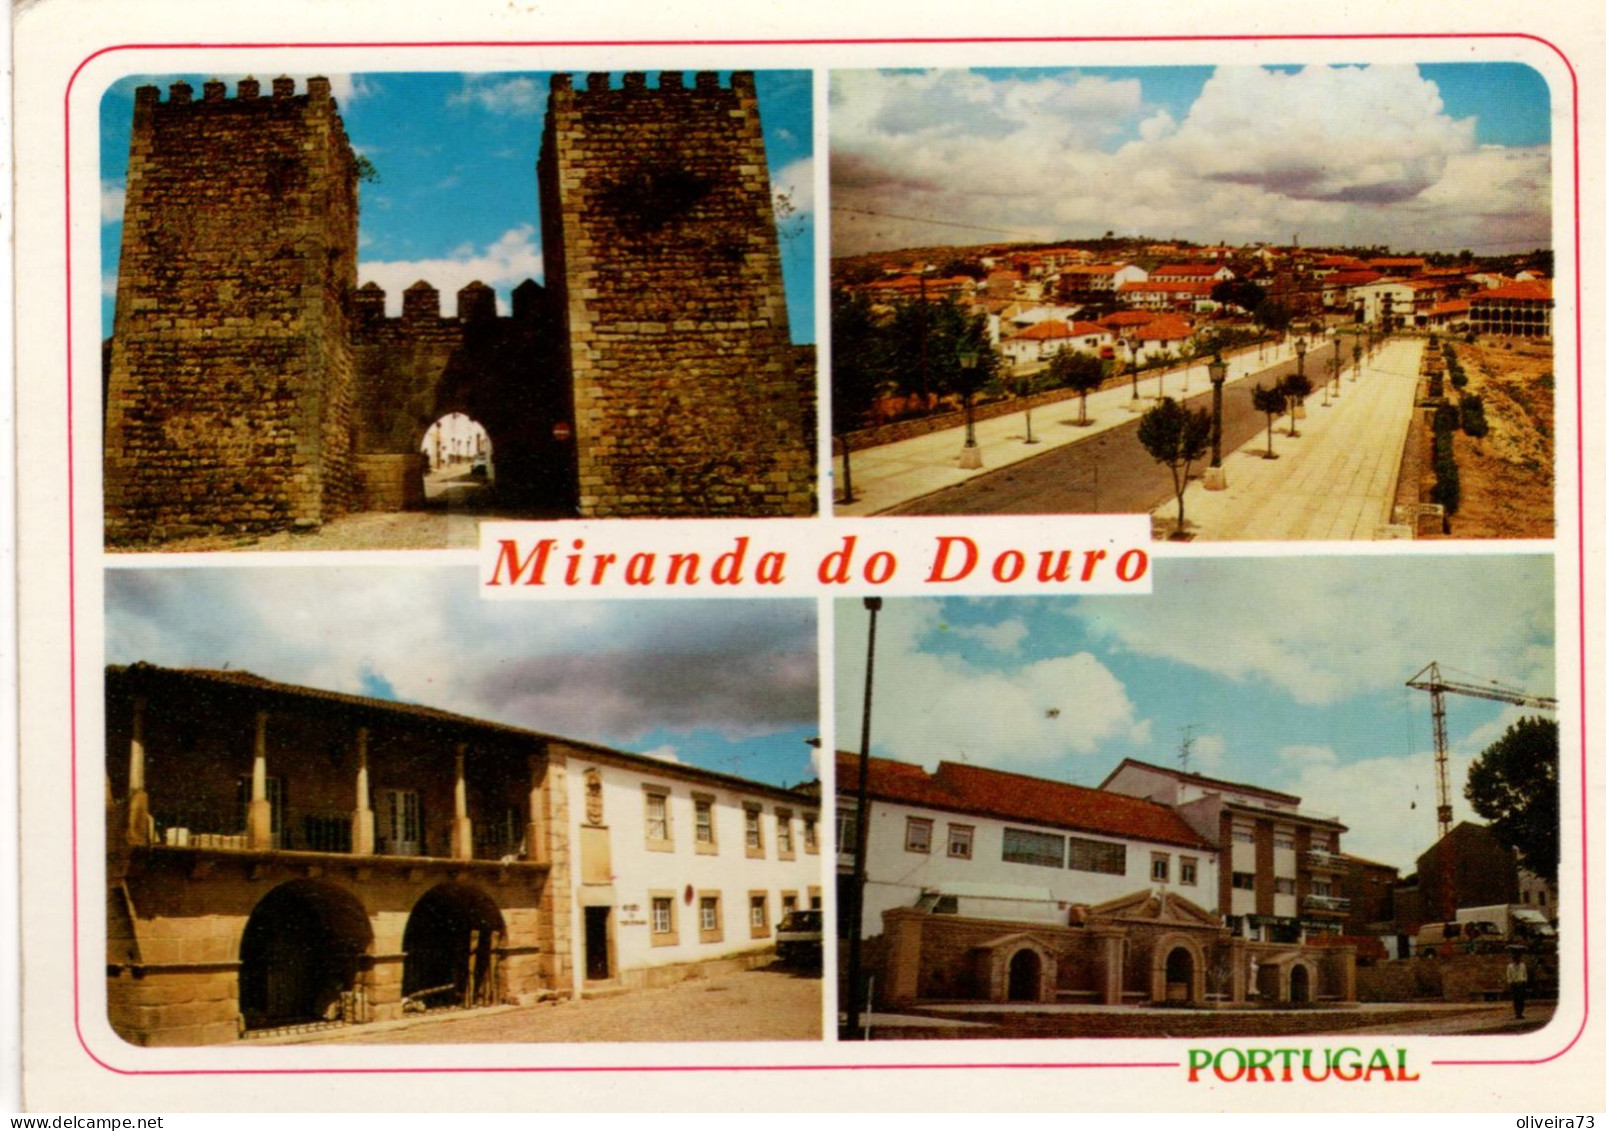 MIRANDA DO DOURO - PORTUGAL - Bragança